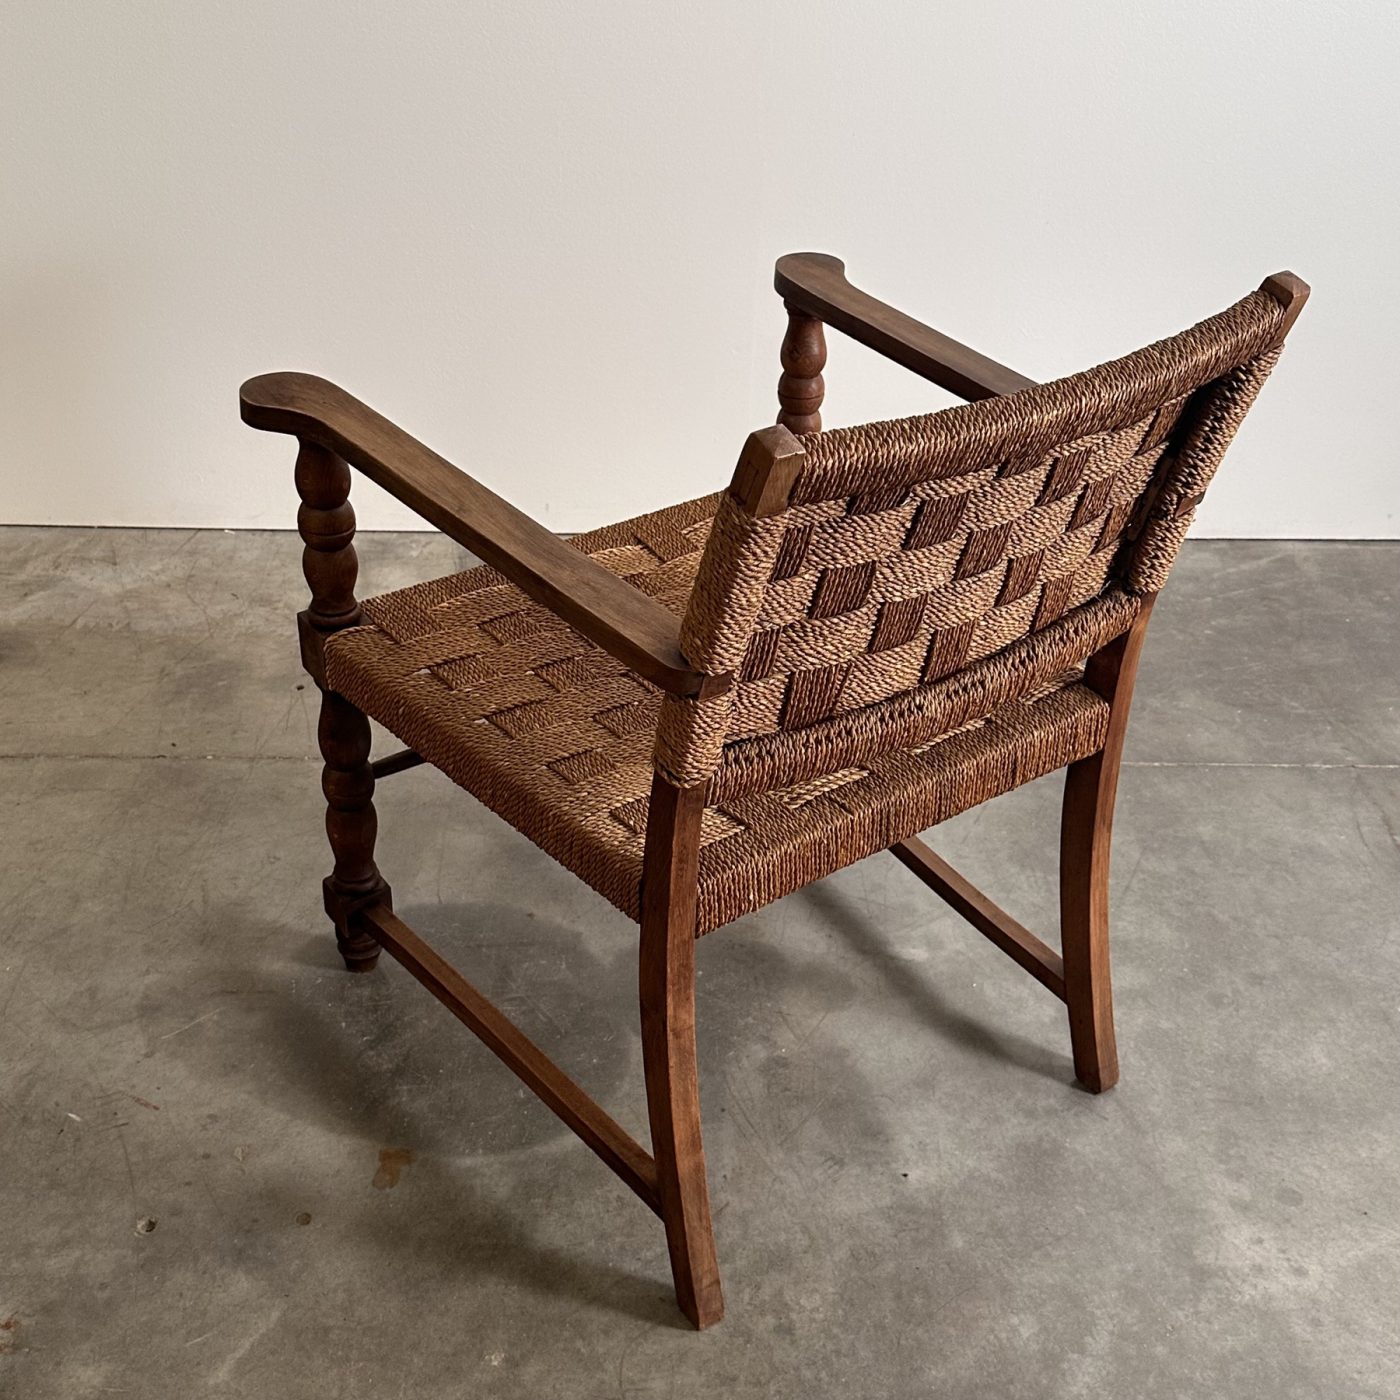 objet-vagabond-rope-armchairs0002